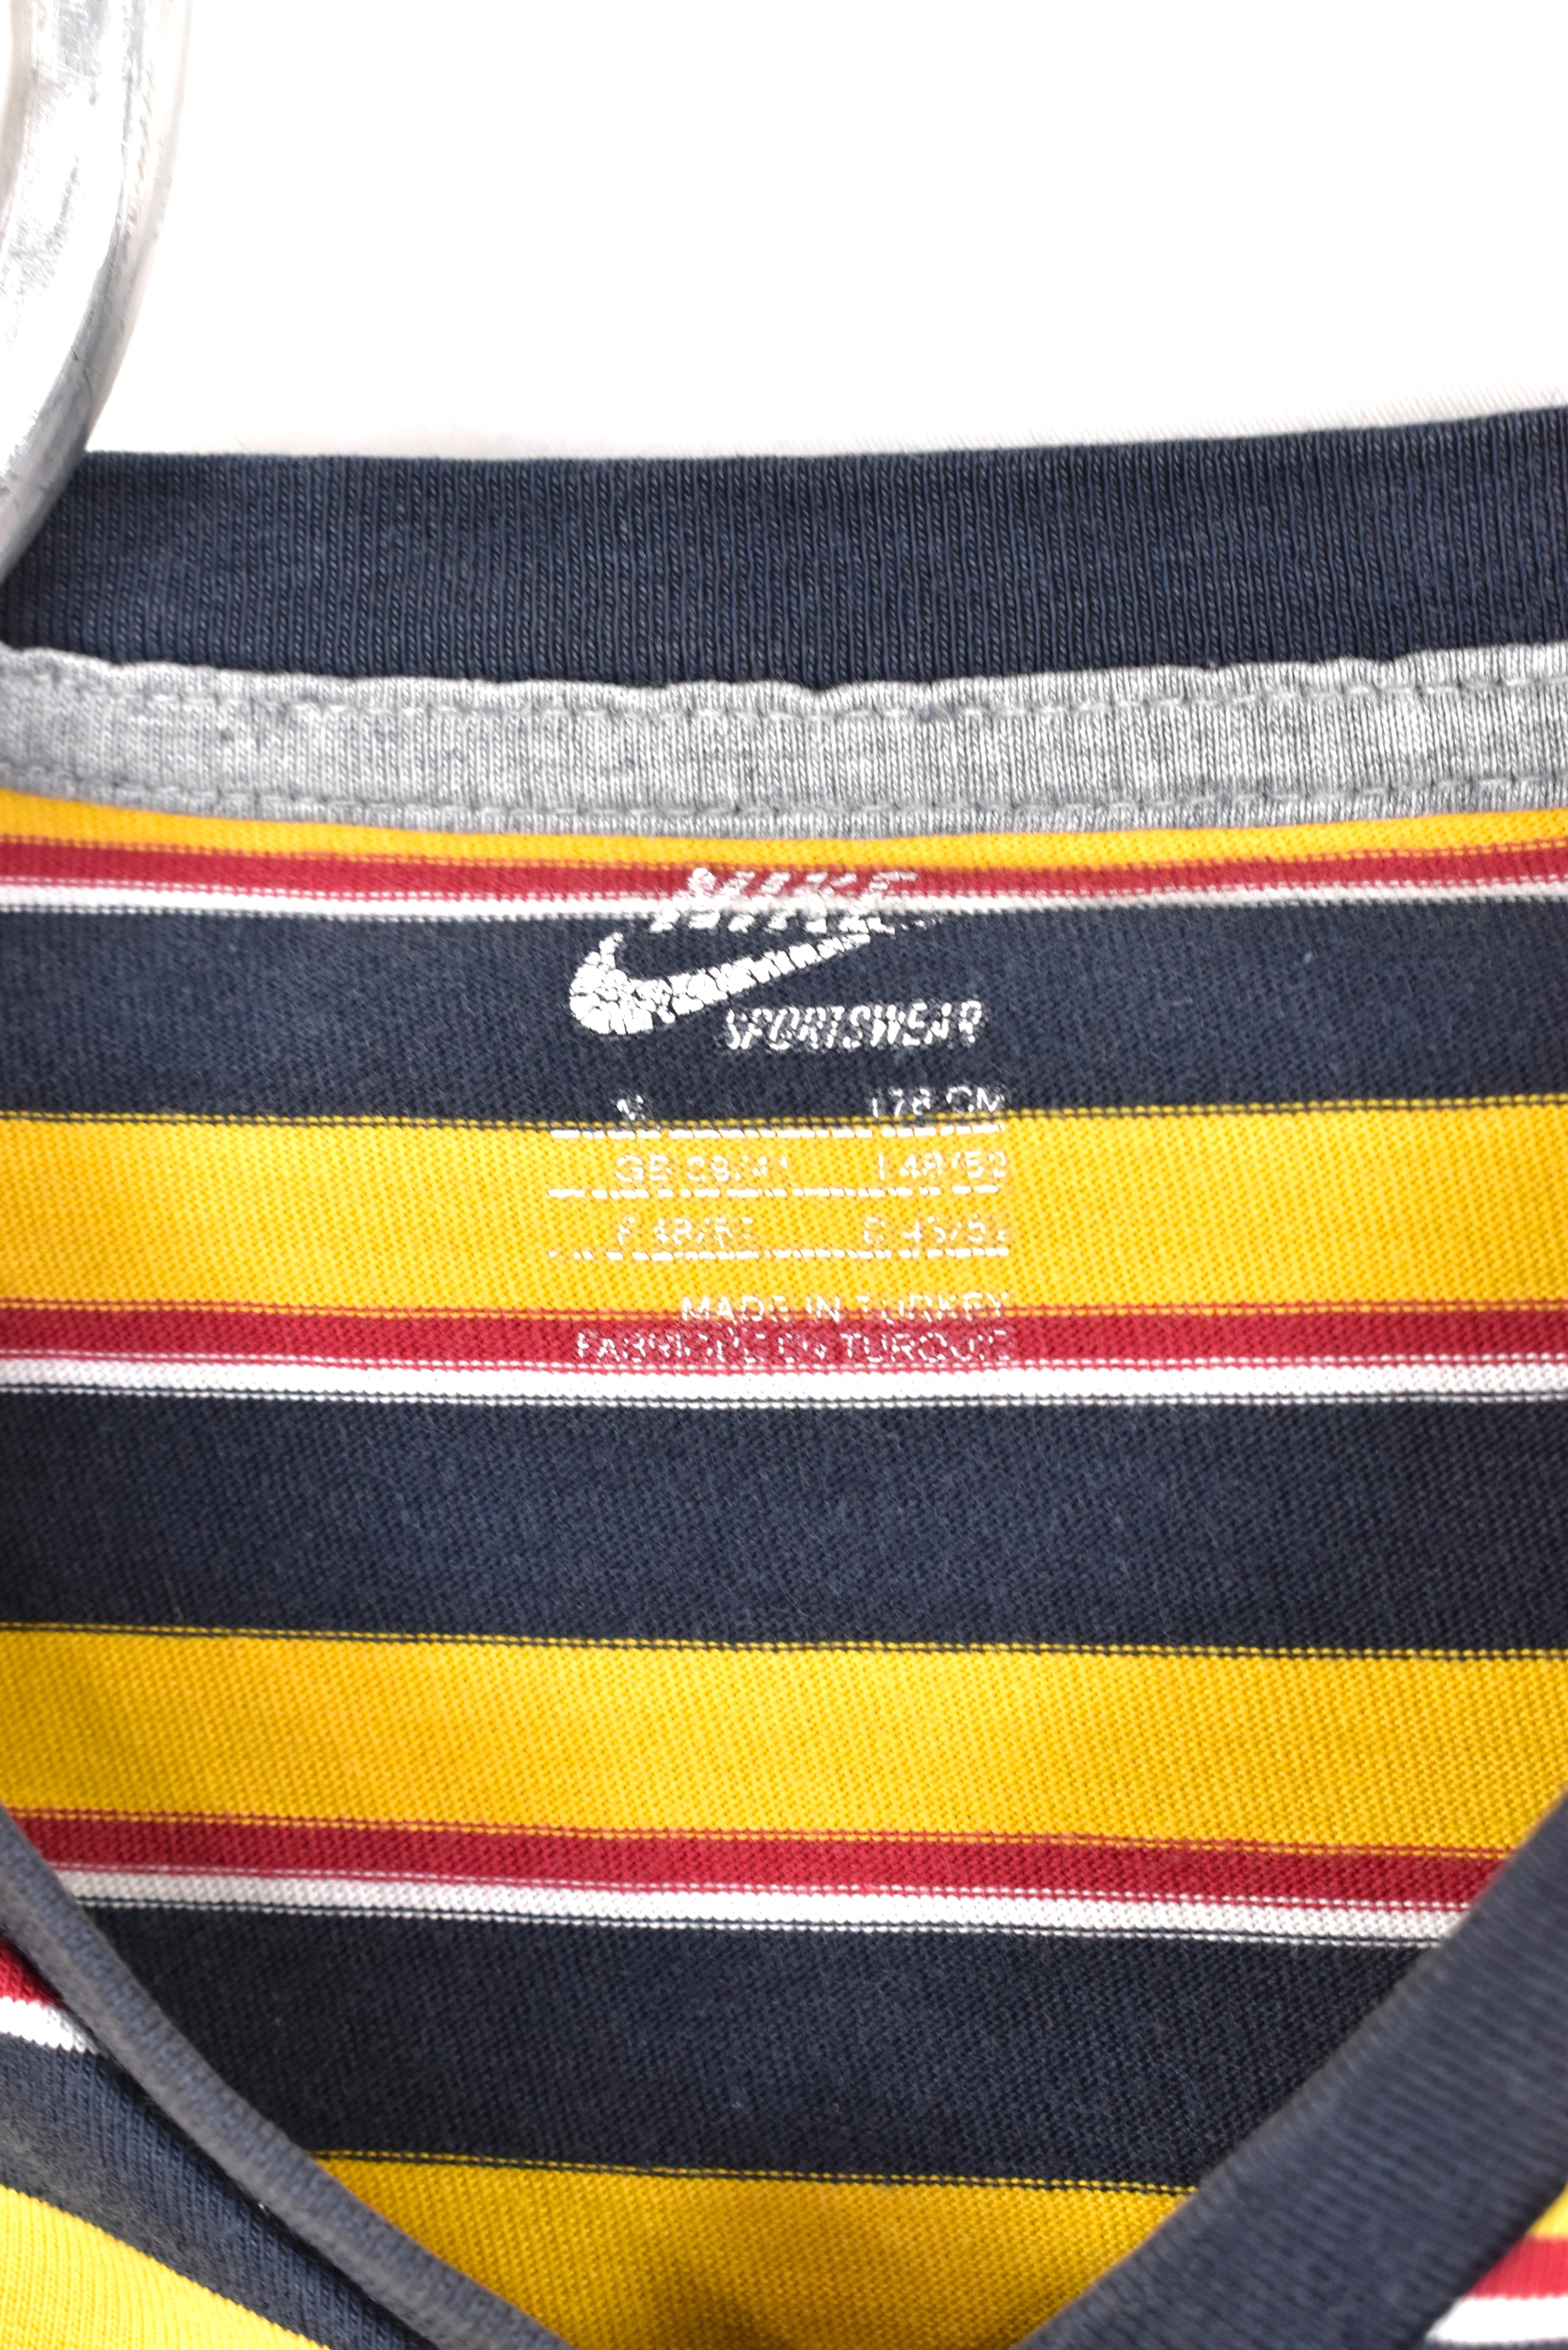 Vintage Nike shirt, striped embroidered tee - AU S NIKE